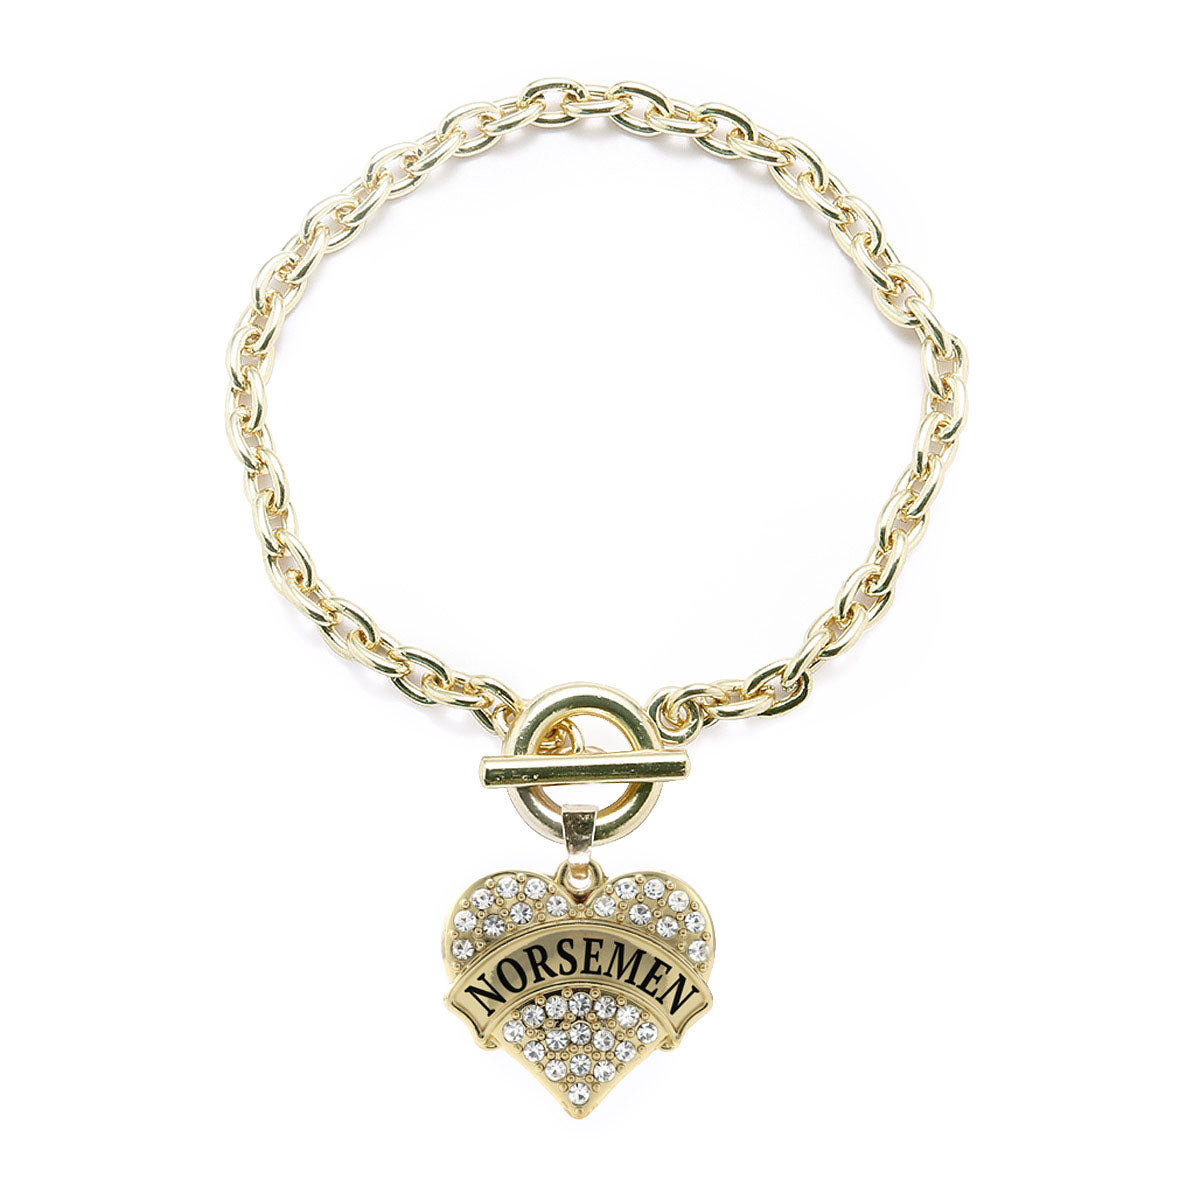 Gold Norsemen Pave Heart Charm Toggle Bracelet